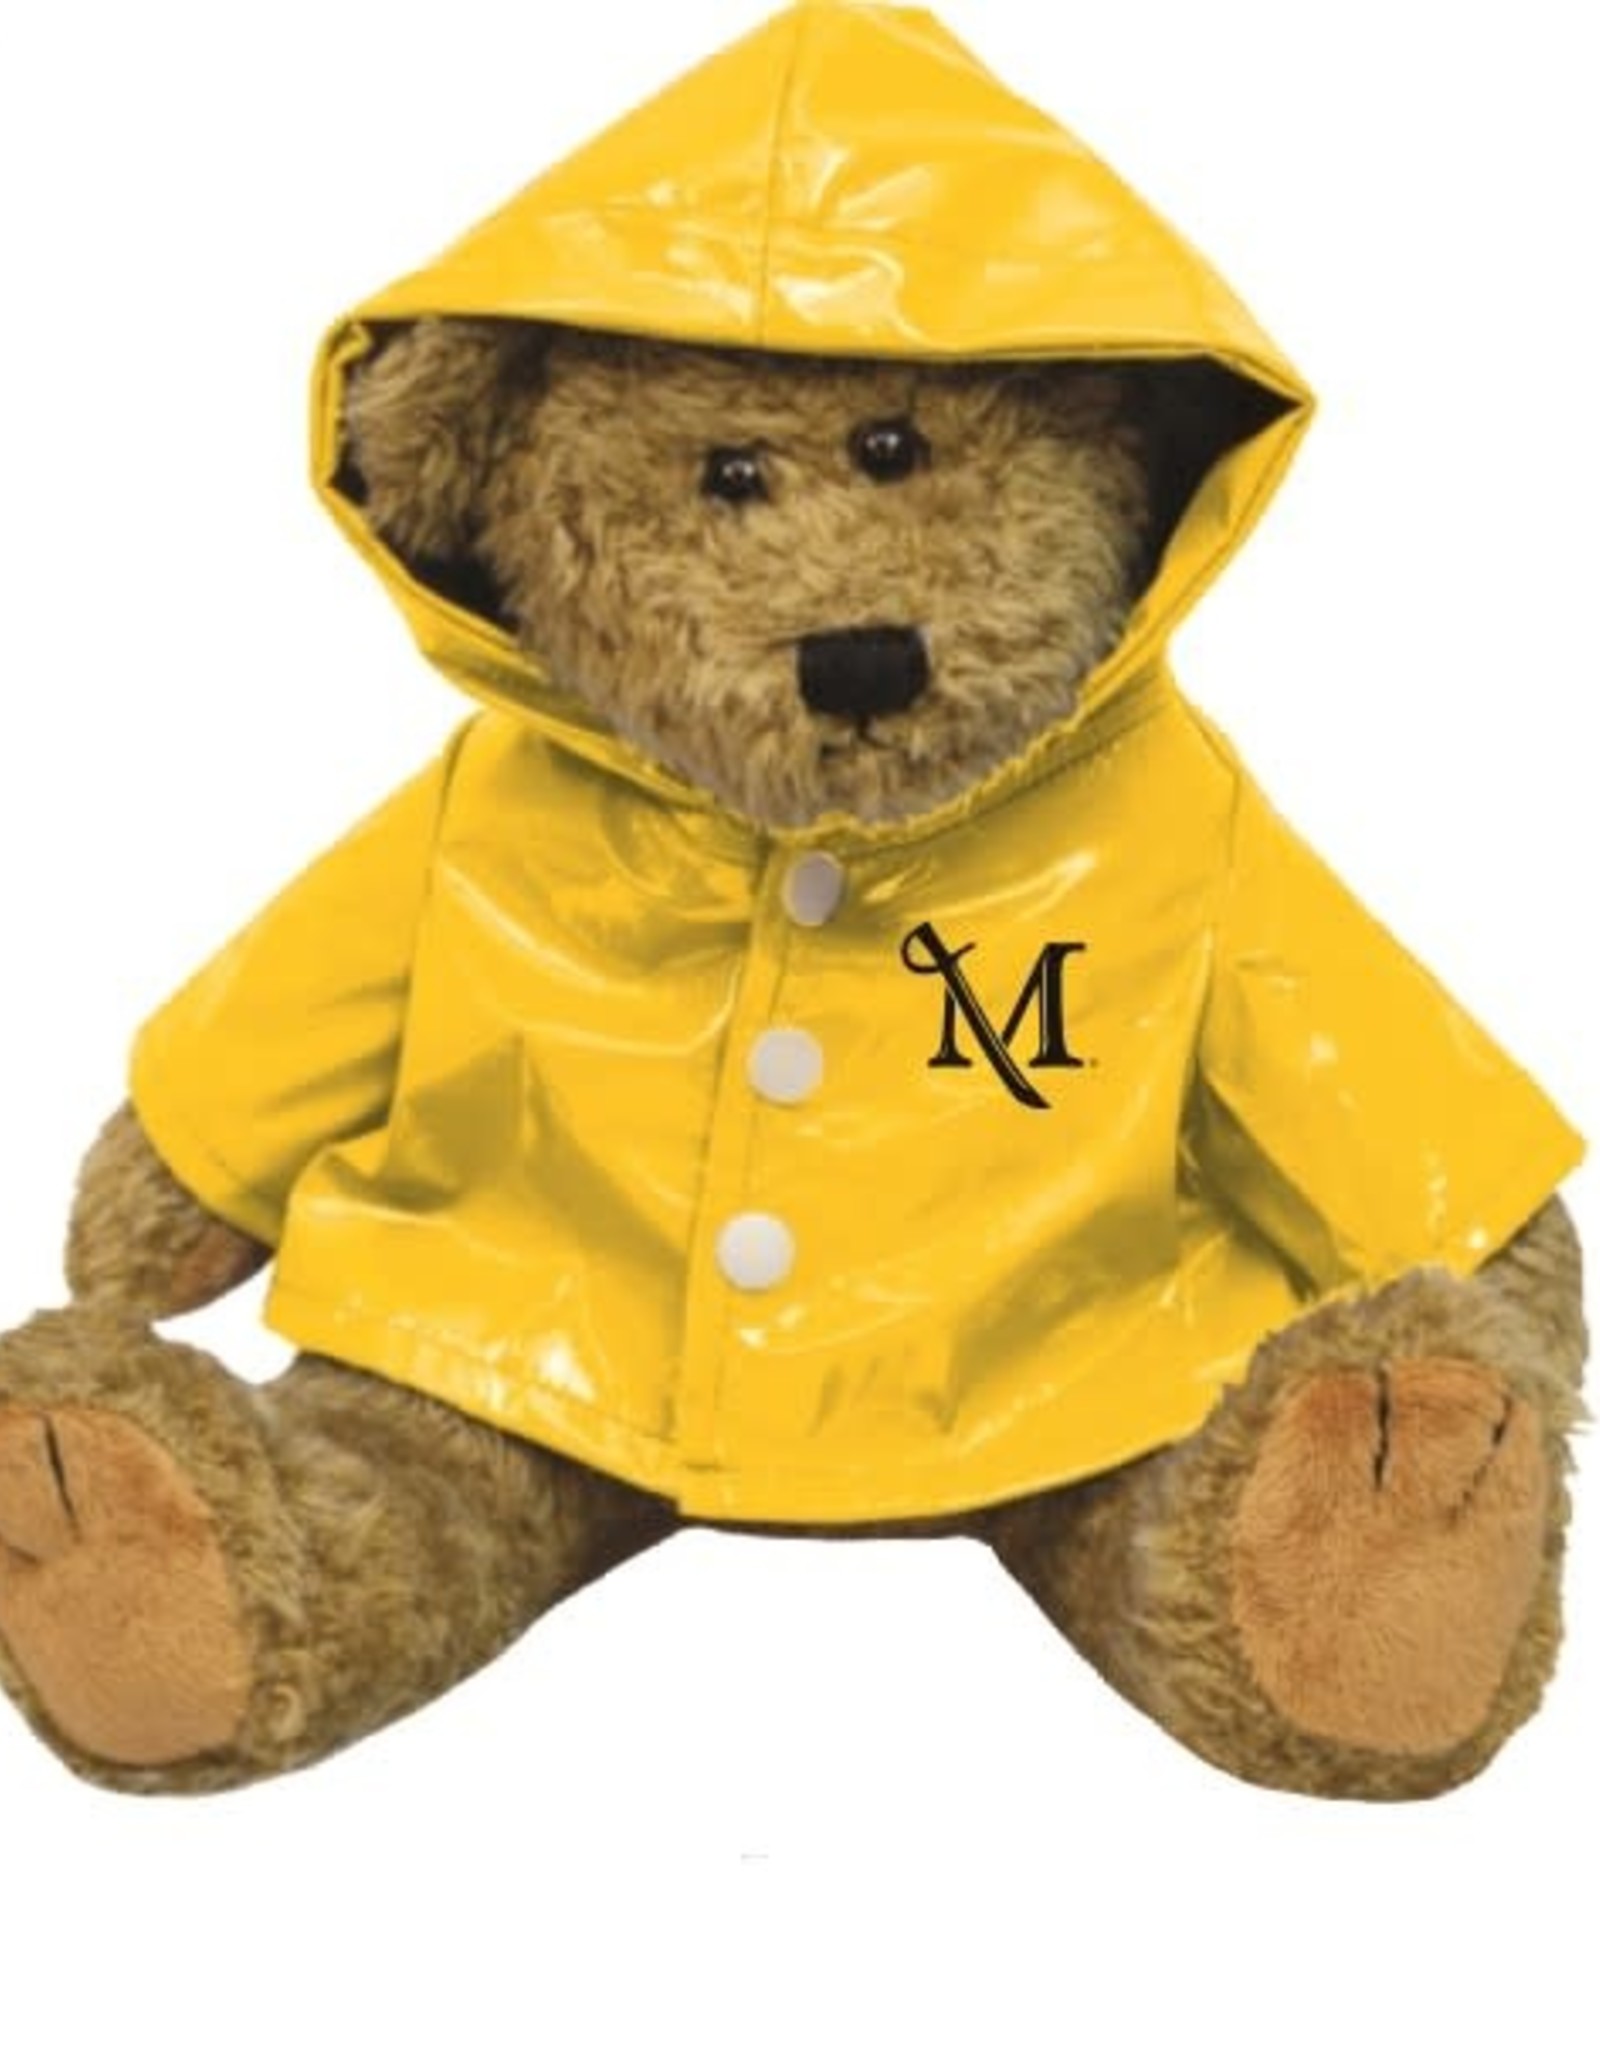 teddy bear in raincoat